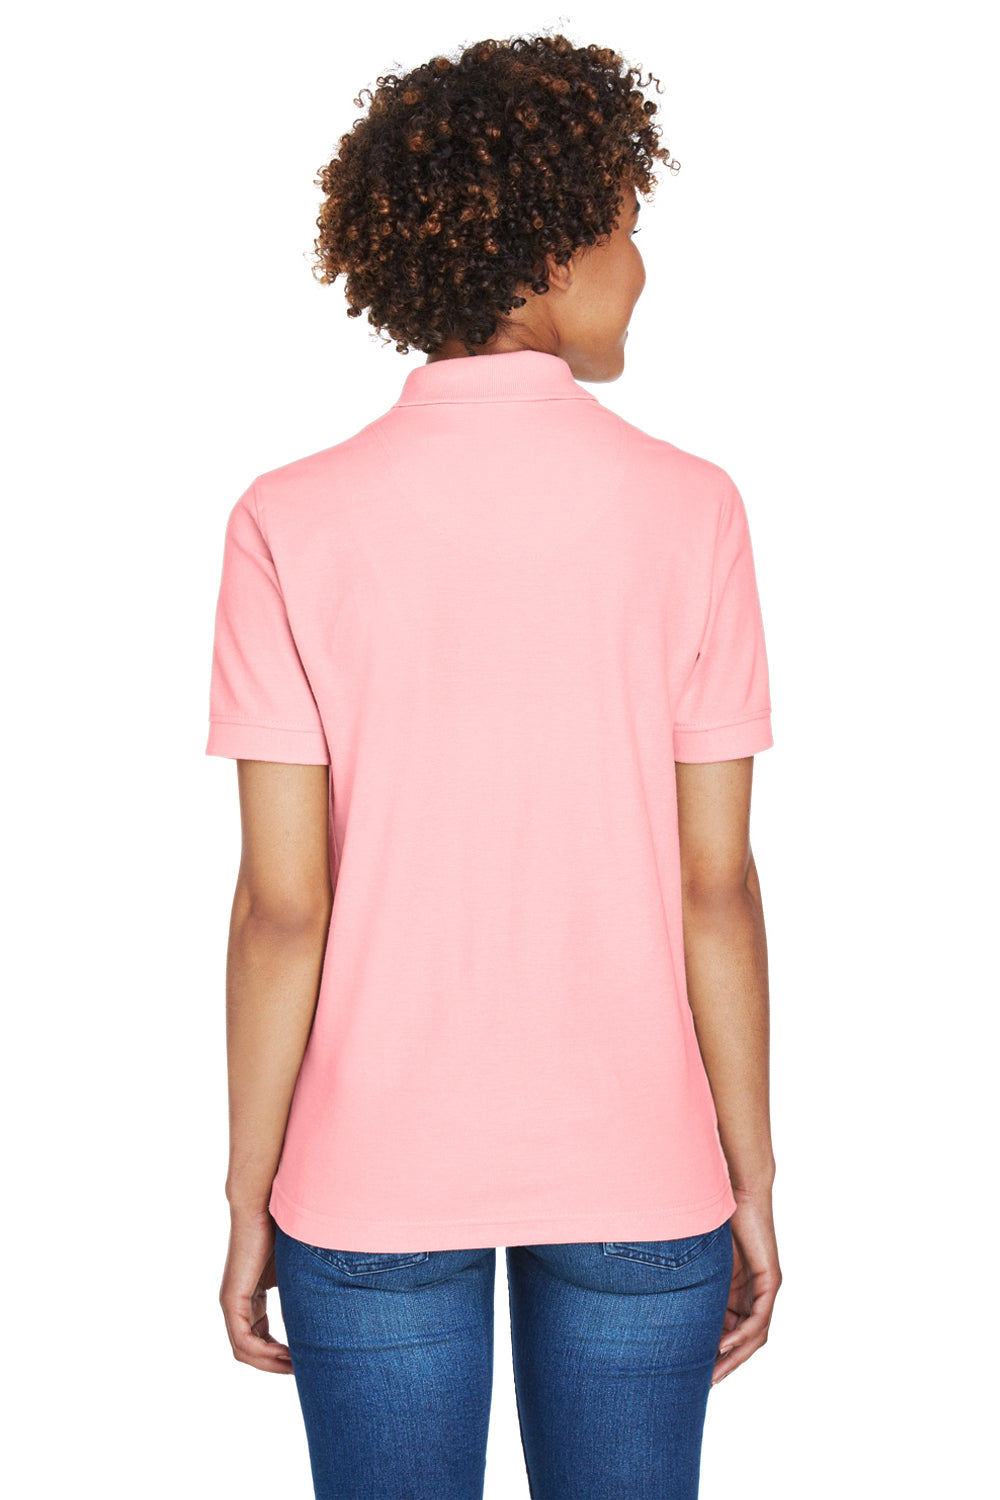 UltraClub 8541 Womens Whisper Short Sleeve Polo Shirt Pink Back